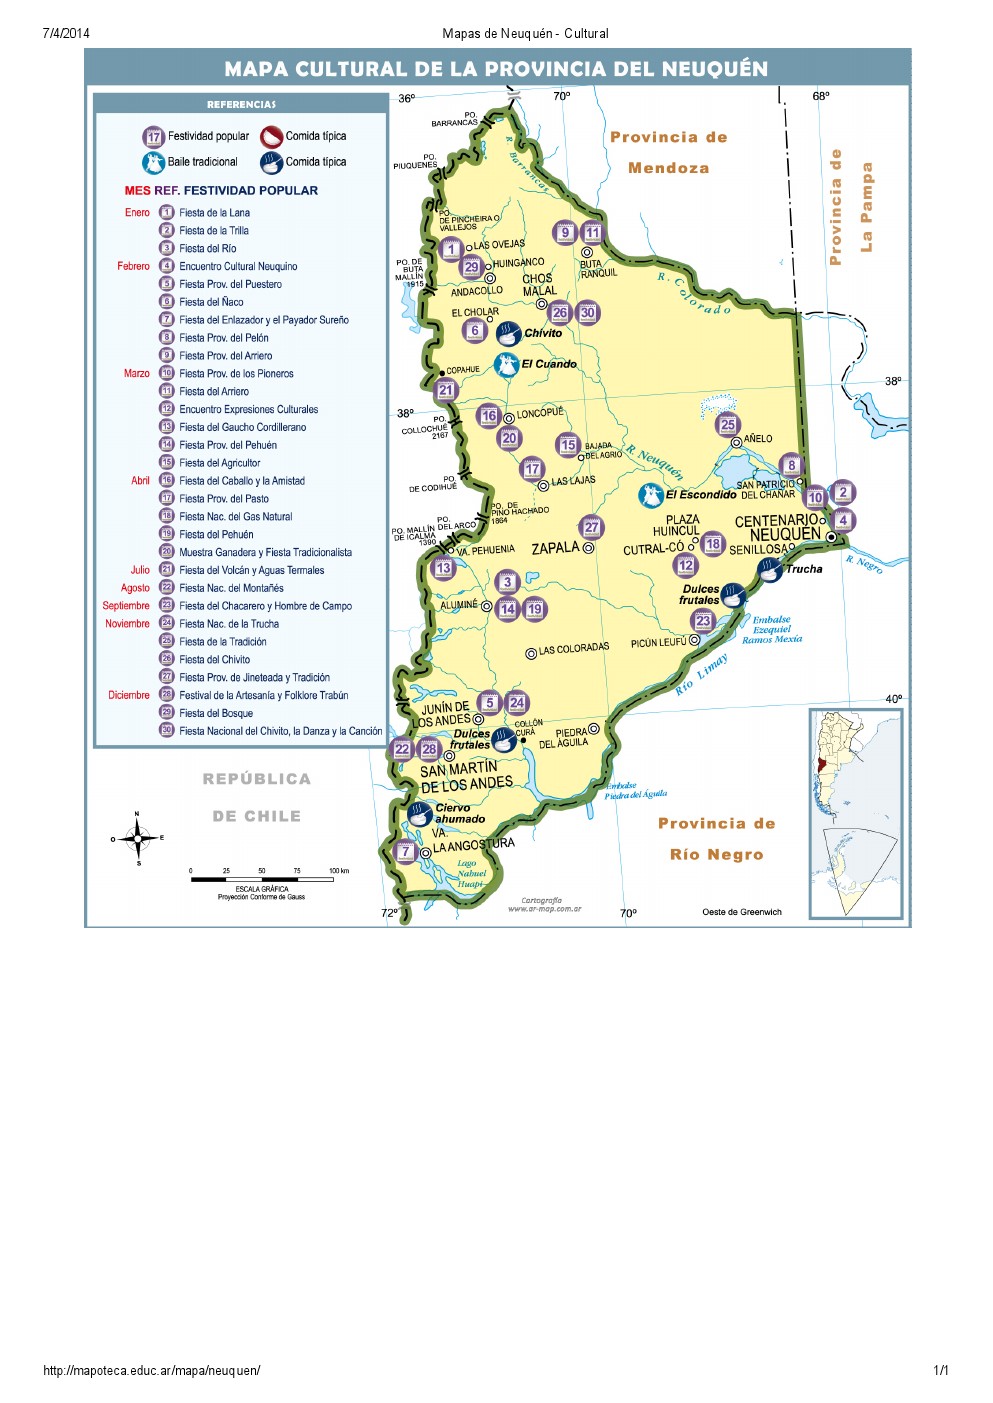 Mapa cultural de Neuquén. Mapoteca de Educ.ar